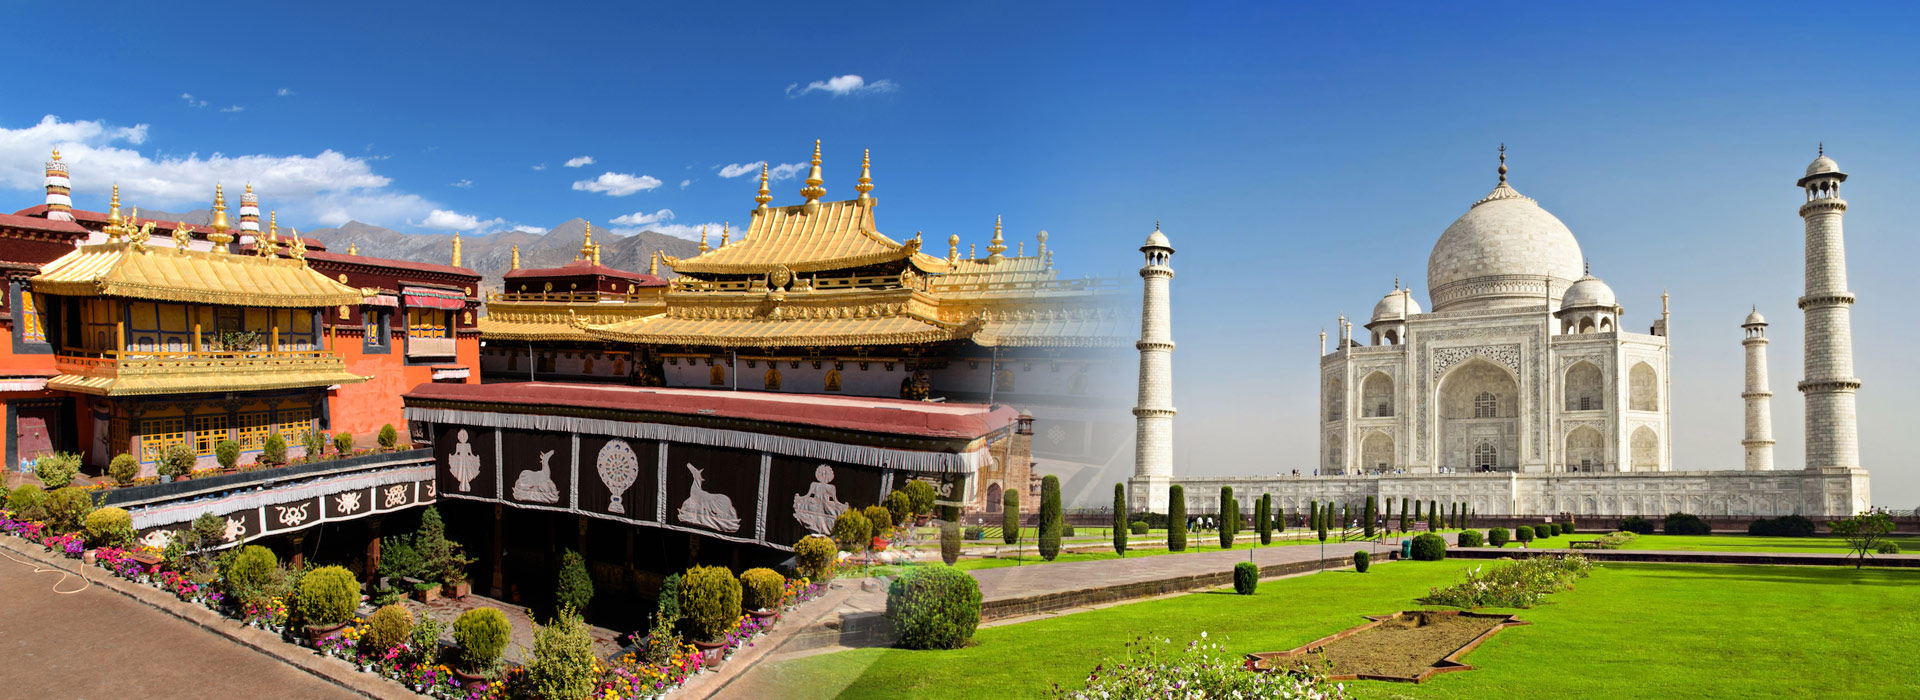 Tibet Tour From India